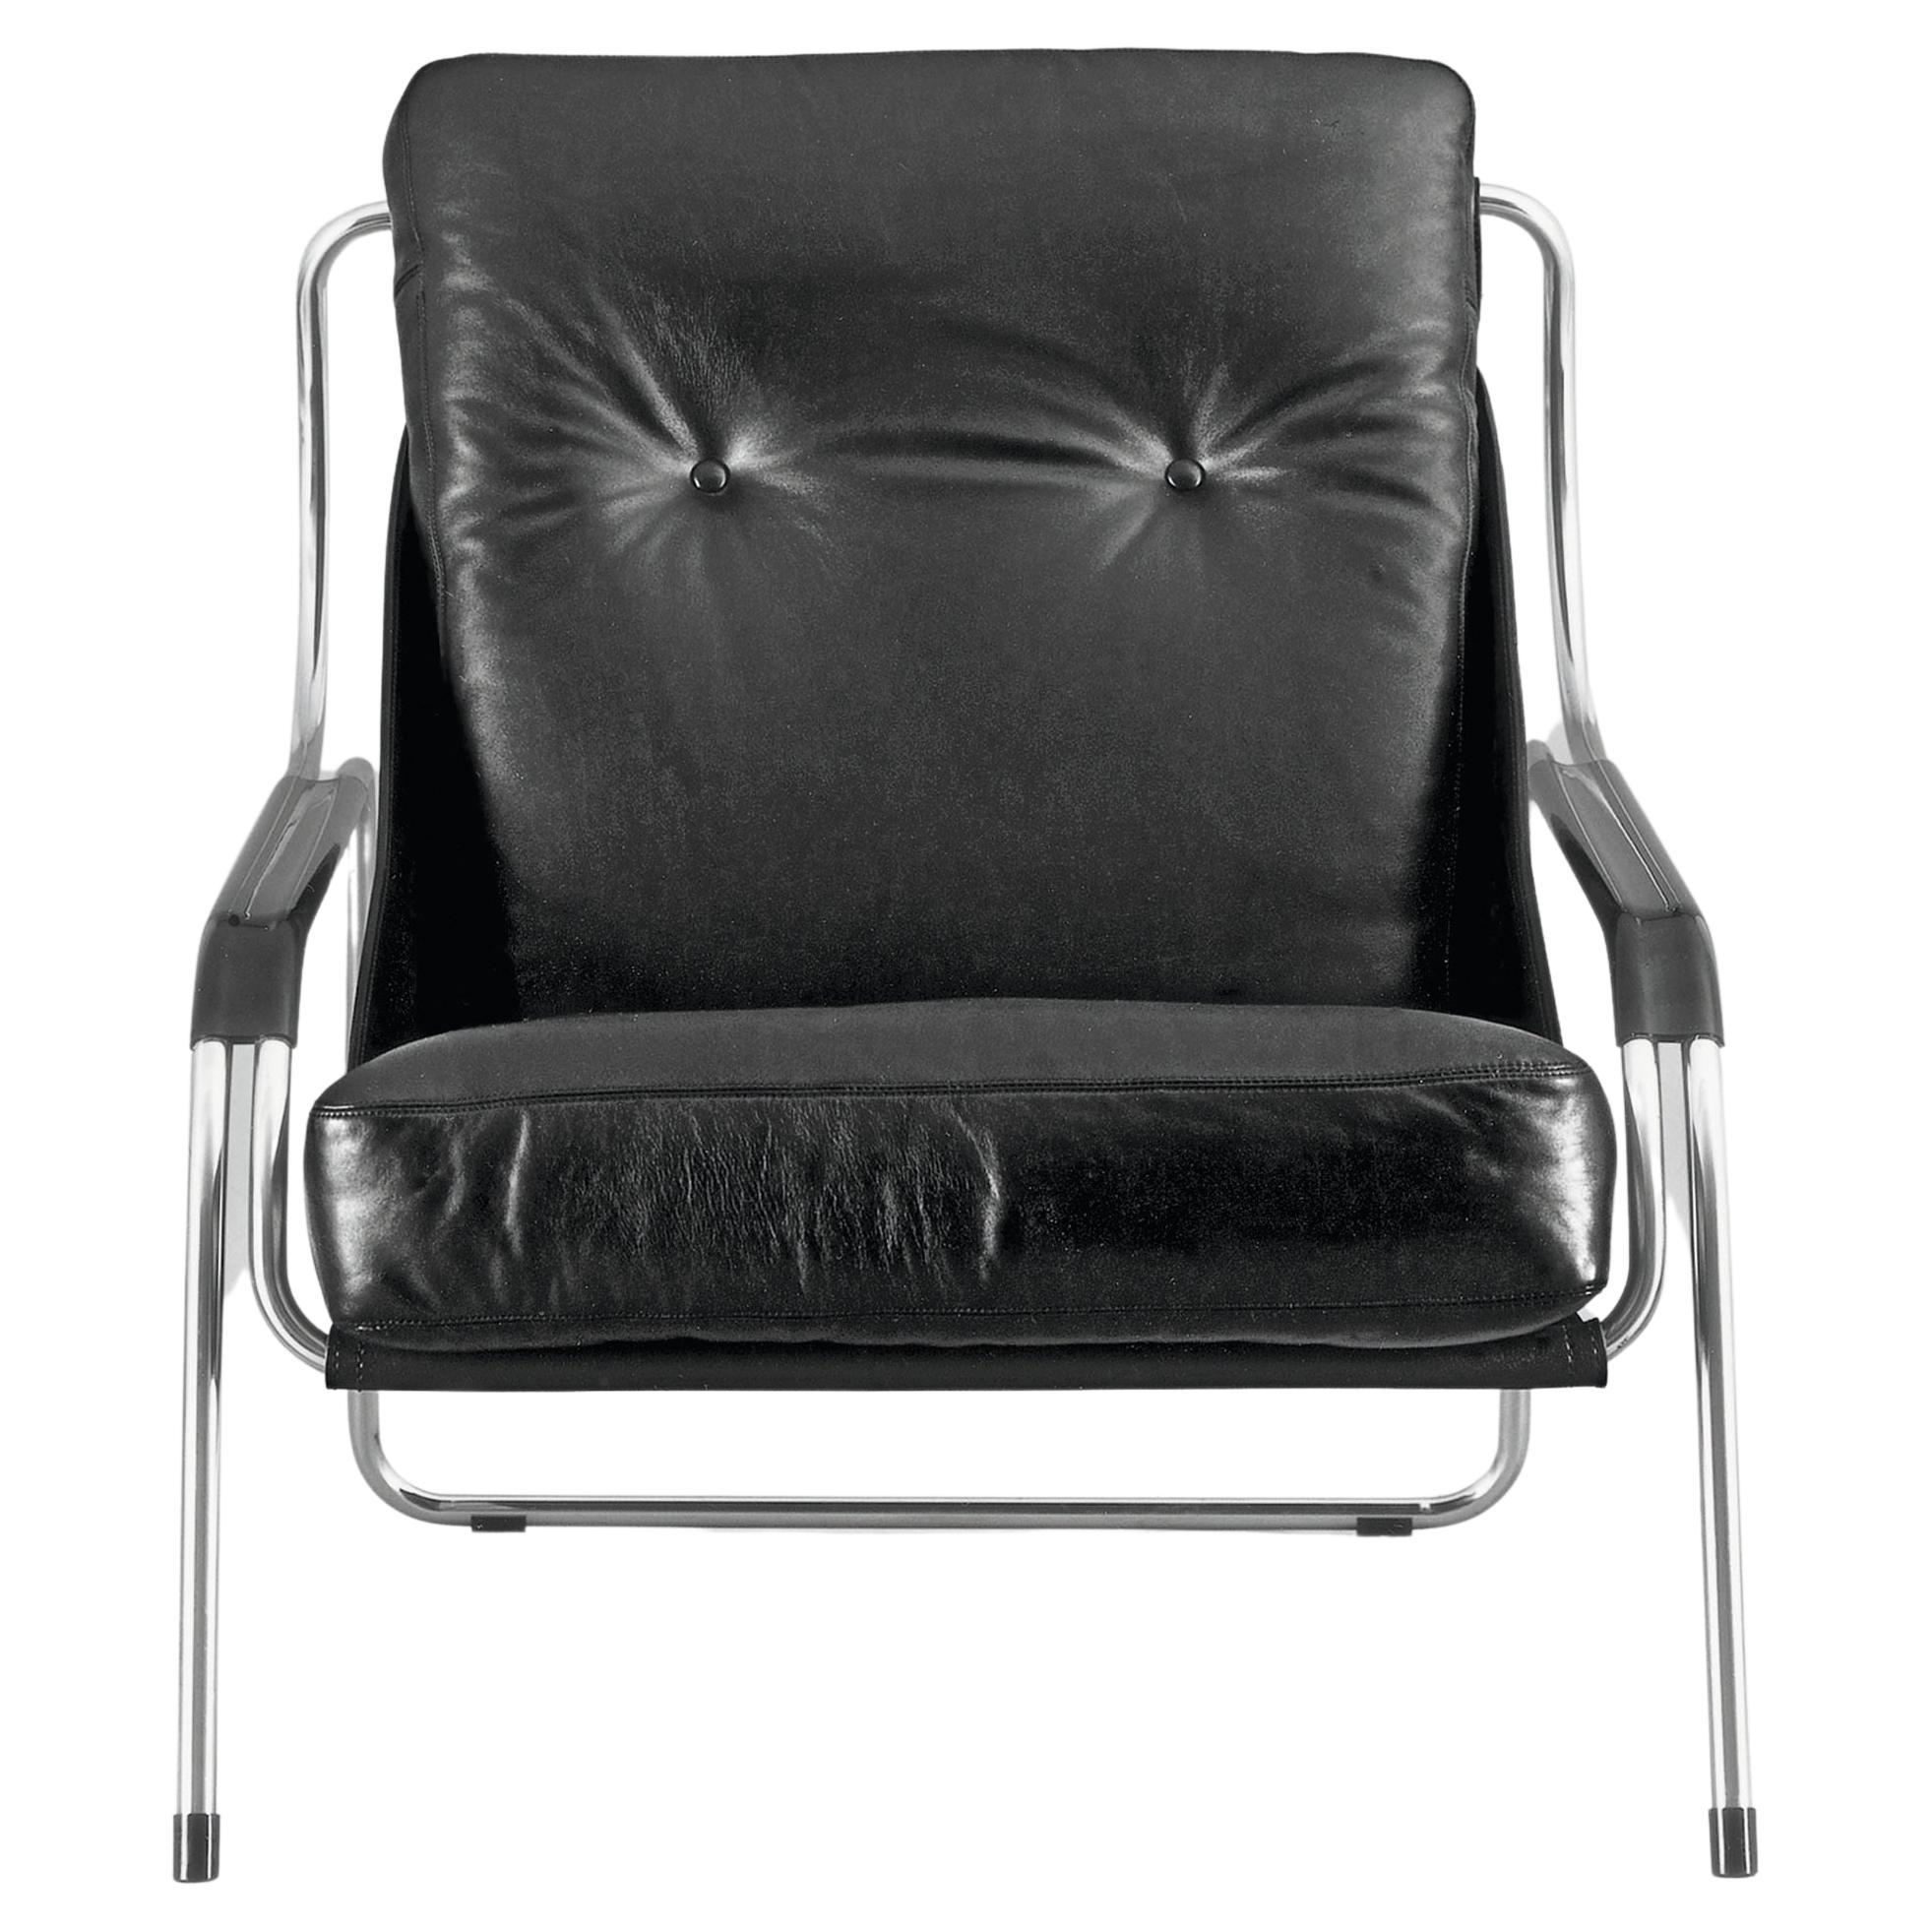 Zanotta Maggiolina Lounge Chair in Black Leather & Steel Frame by Marco Zanuso